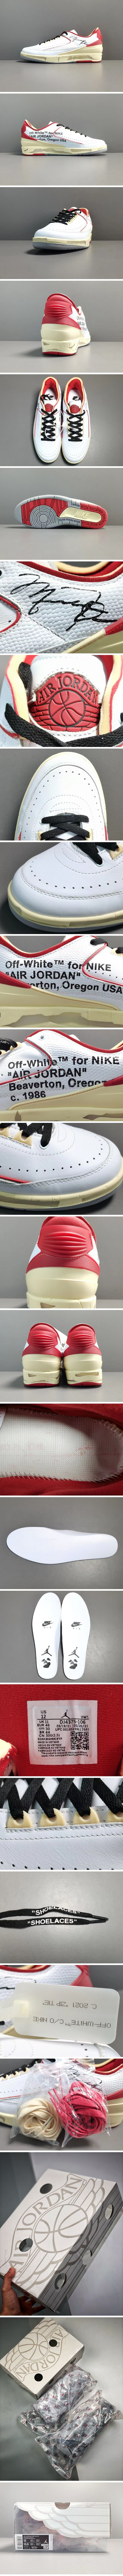 Nike x Off-White Air Jordan 2 Retro Low White and Versity Red DJ4375-106 ナイキ x オフホワイト エアジョーダン2 レトロ ホワイト & バーシティレッド